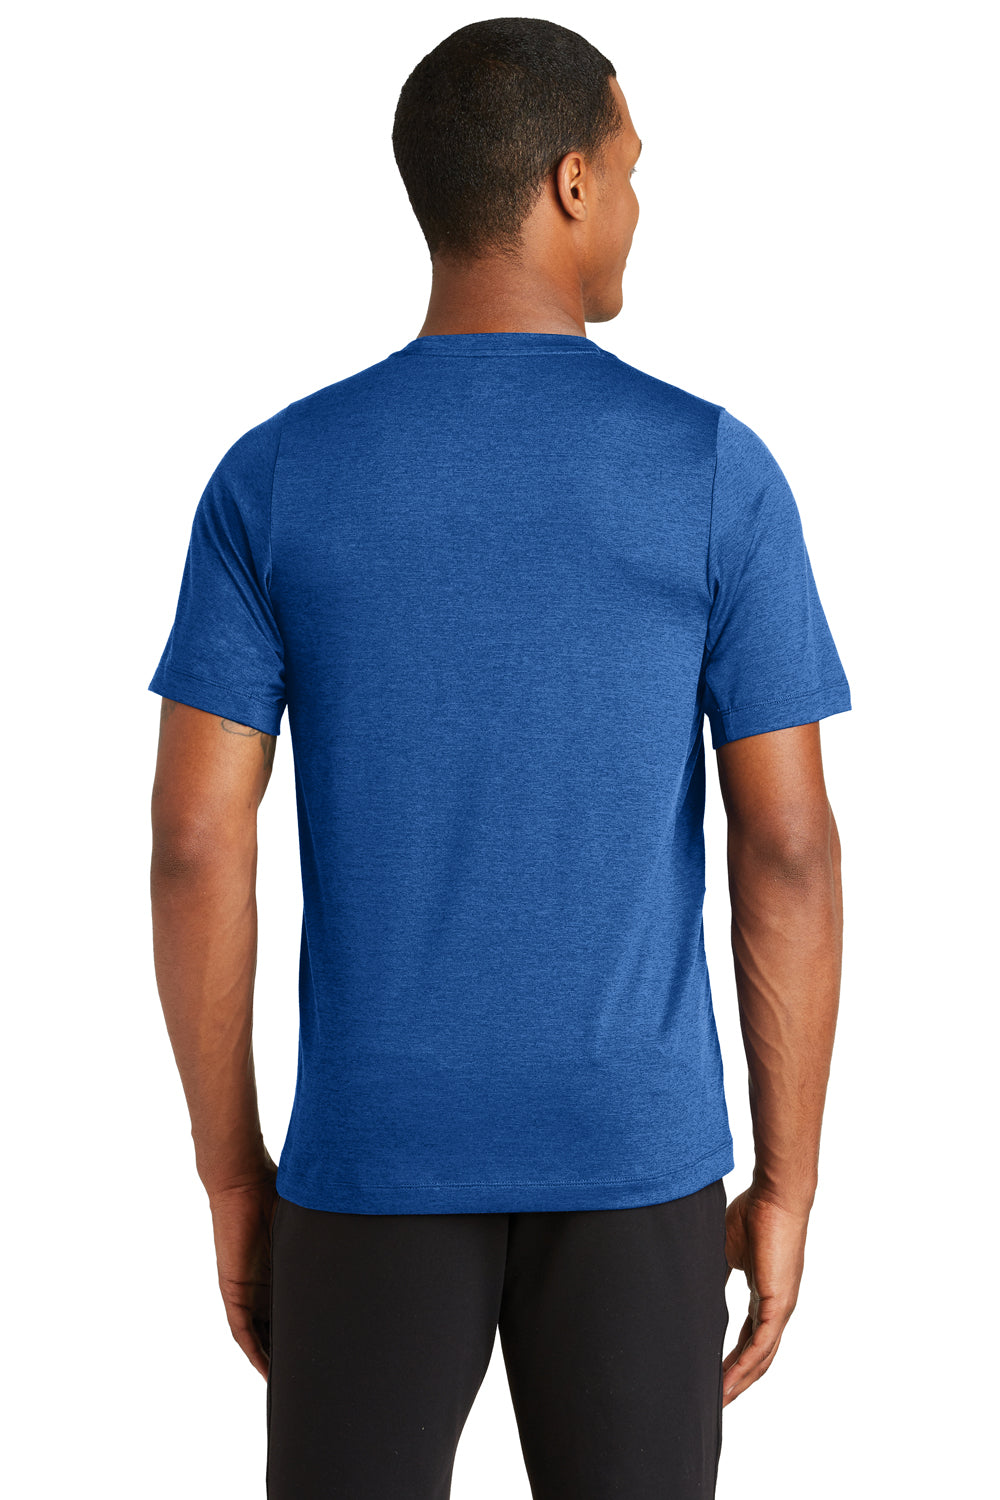 New Era NEA200 Mens Series Performance Jersey Moisture Wicking Short Sleeve Crewneck T-Shirt Royal Blue Back